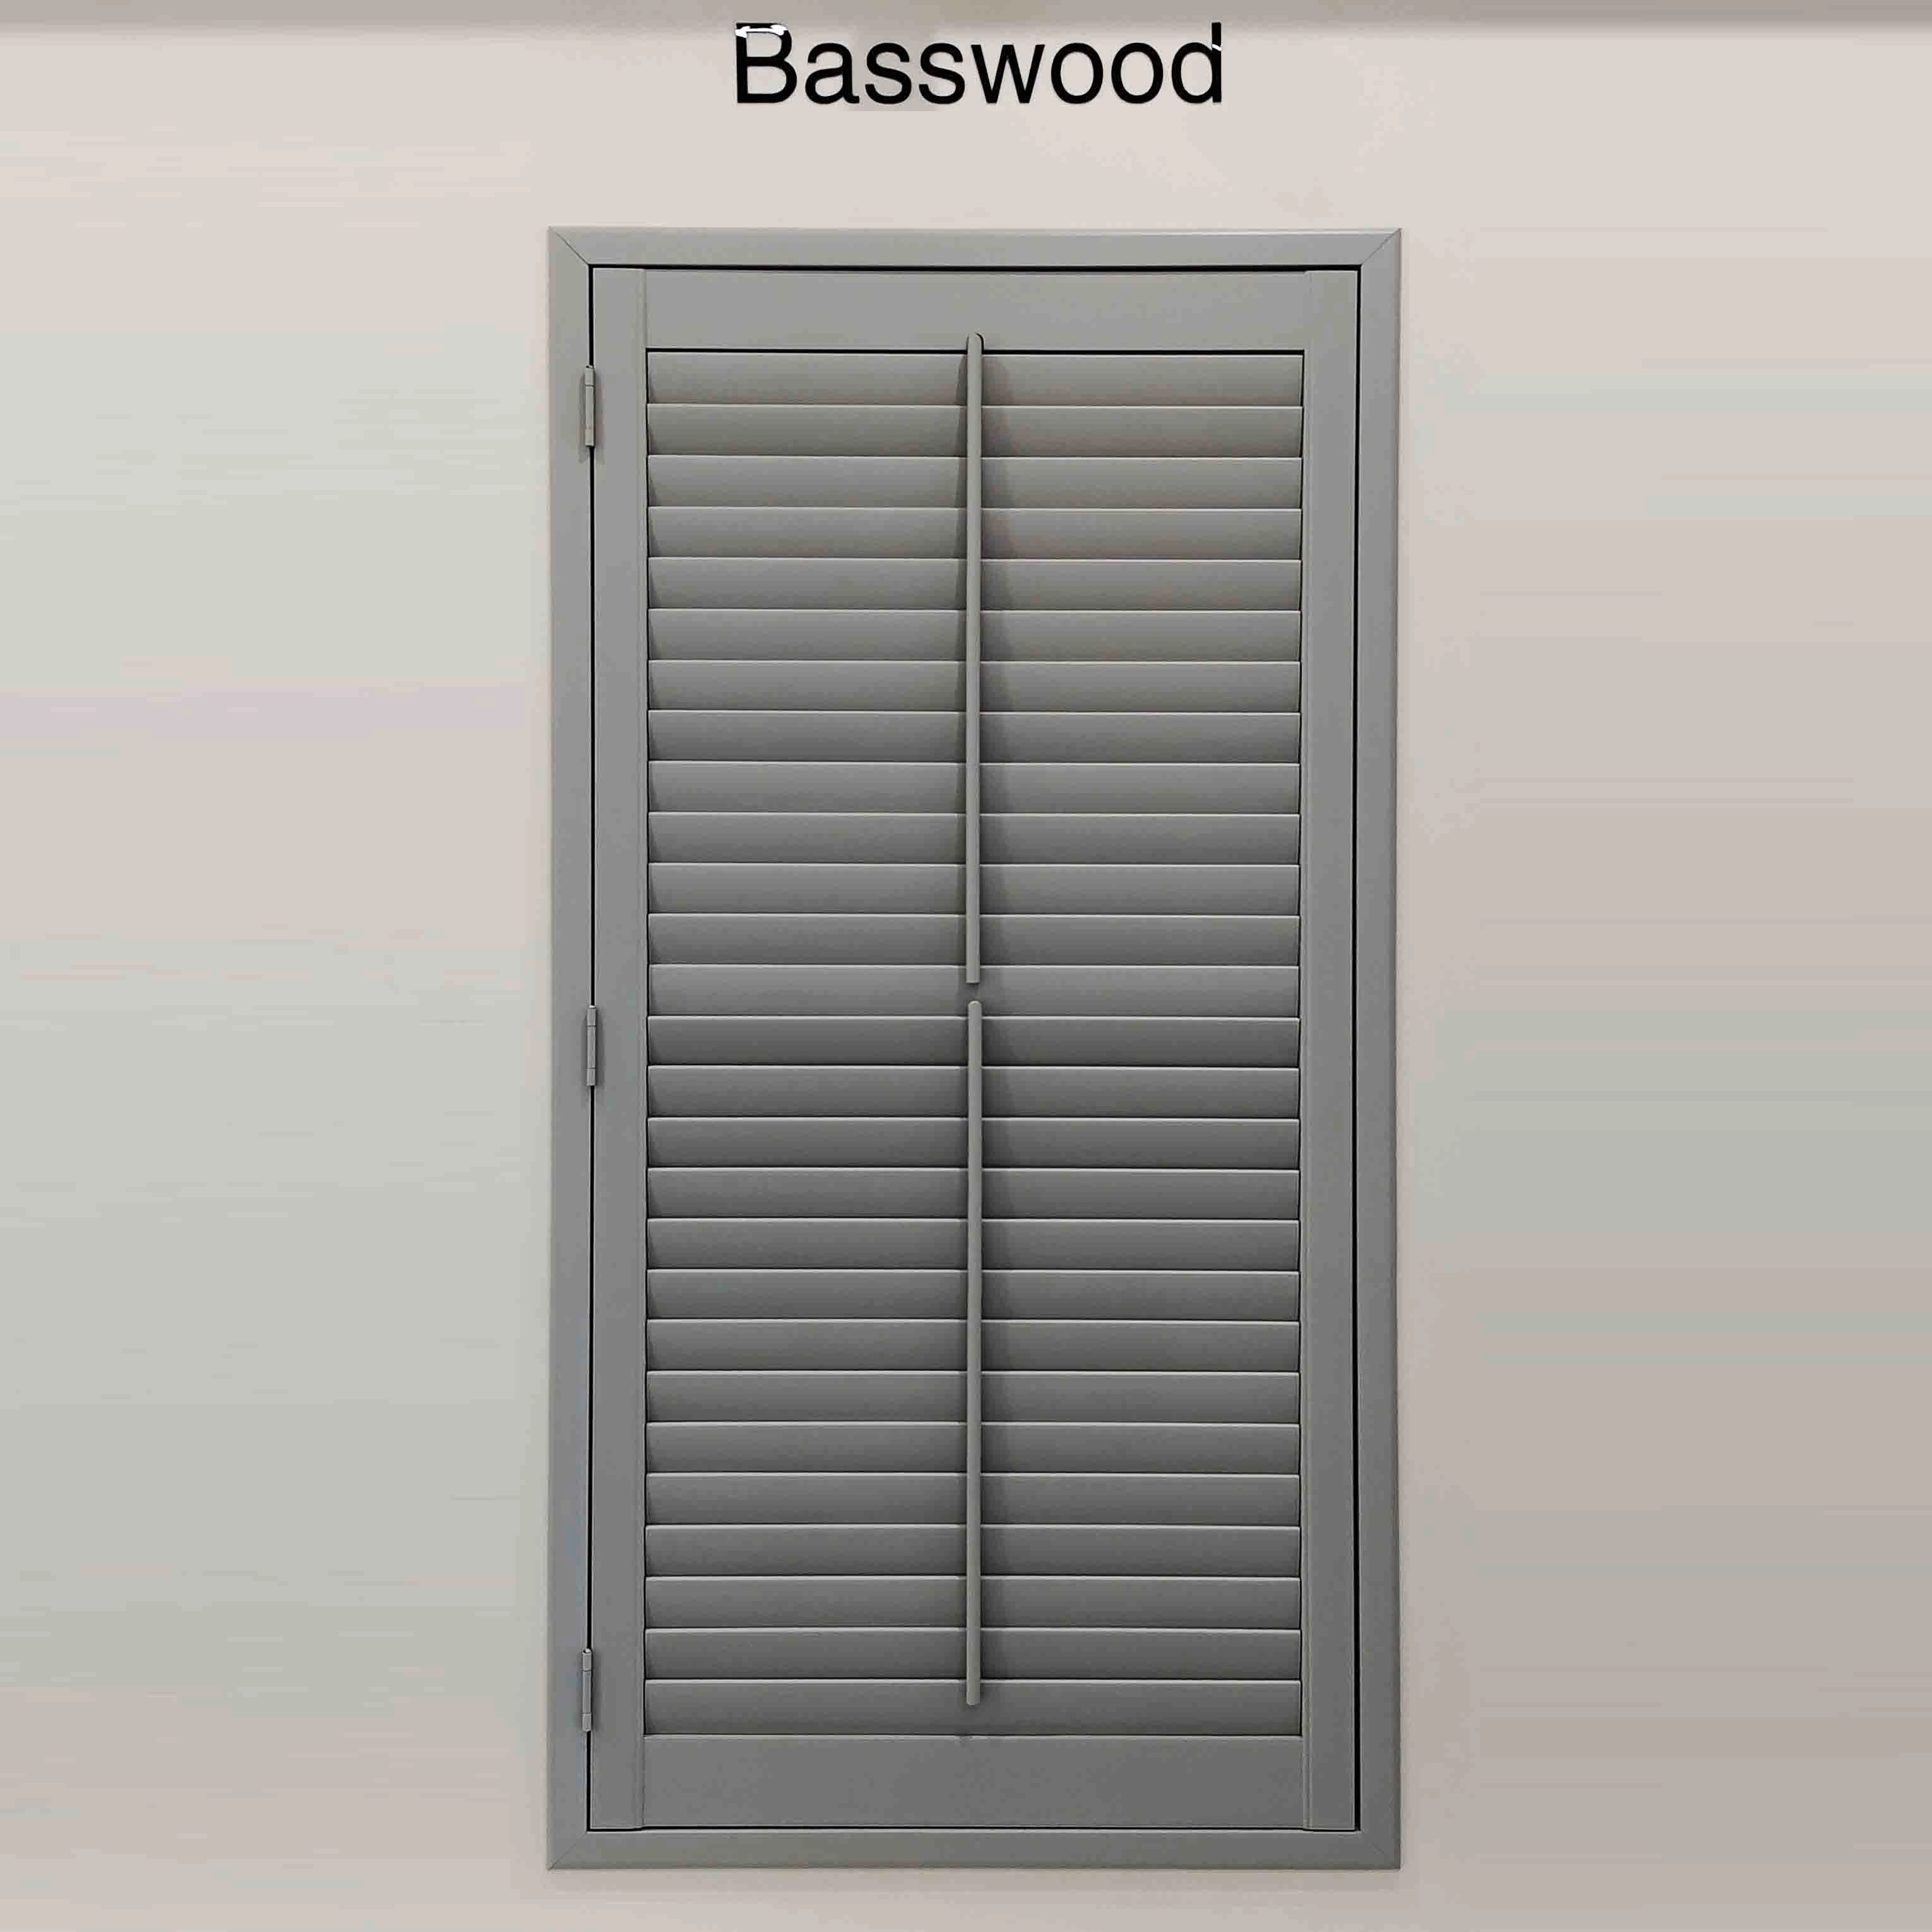 Çin Basswood pencere panjur tedarikçisi, orta çubuk panjur üretici firma